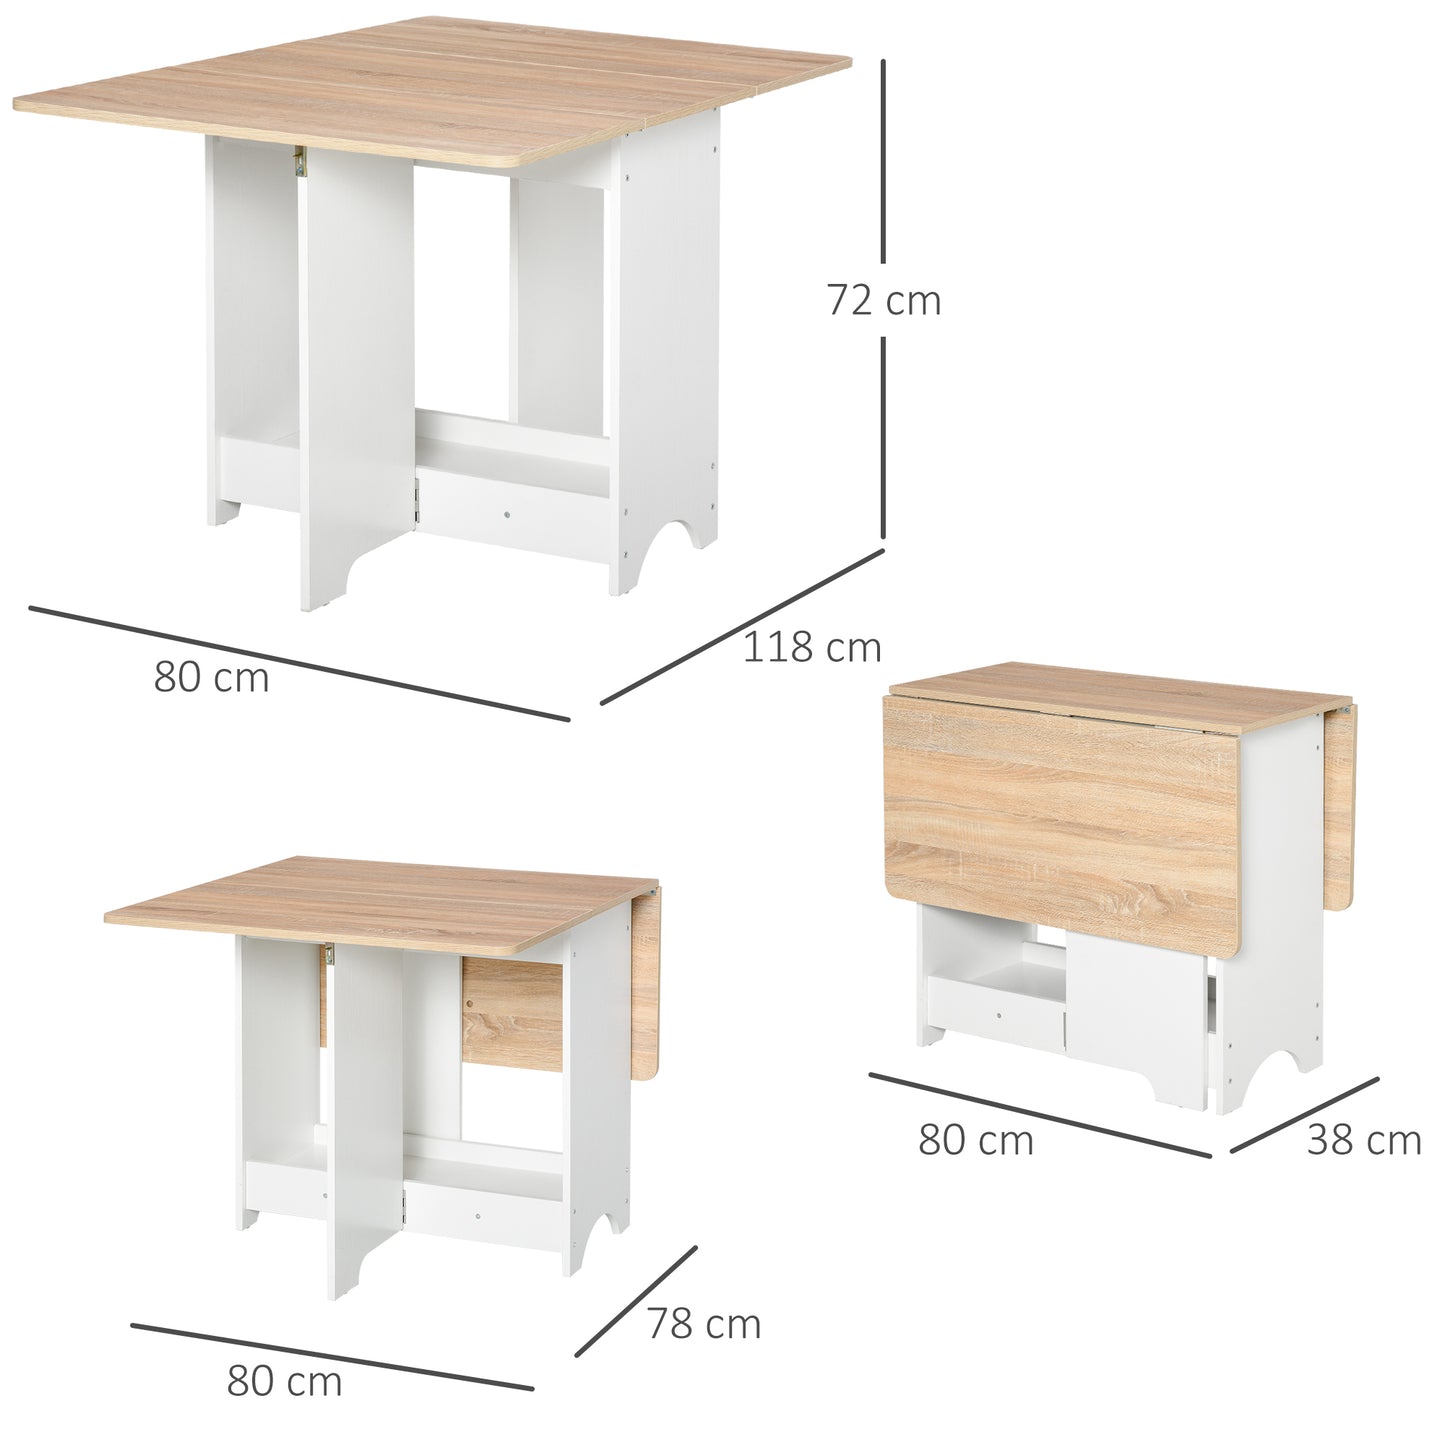 HOMCOM Drop-Leaf Dining Table Folding Desk Foldable Bar Table with Storage Shelf